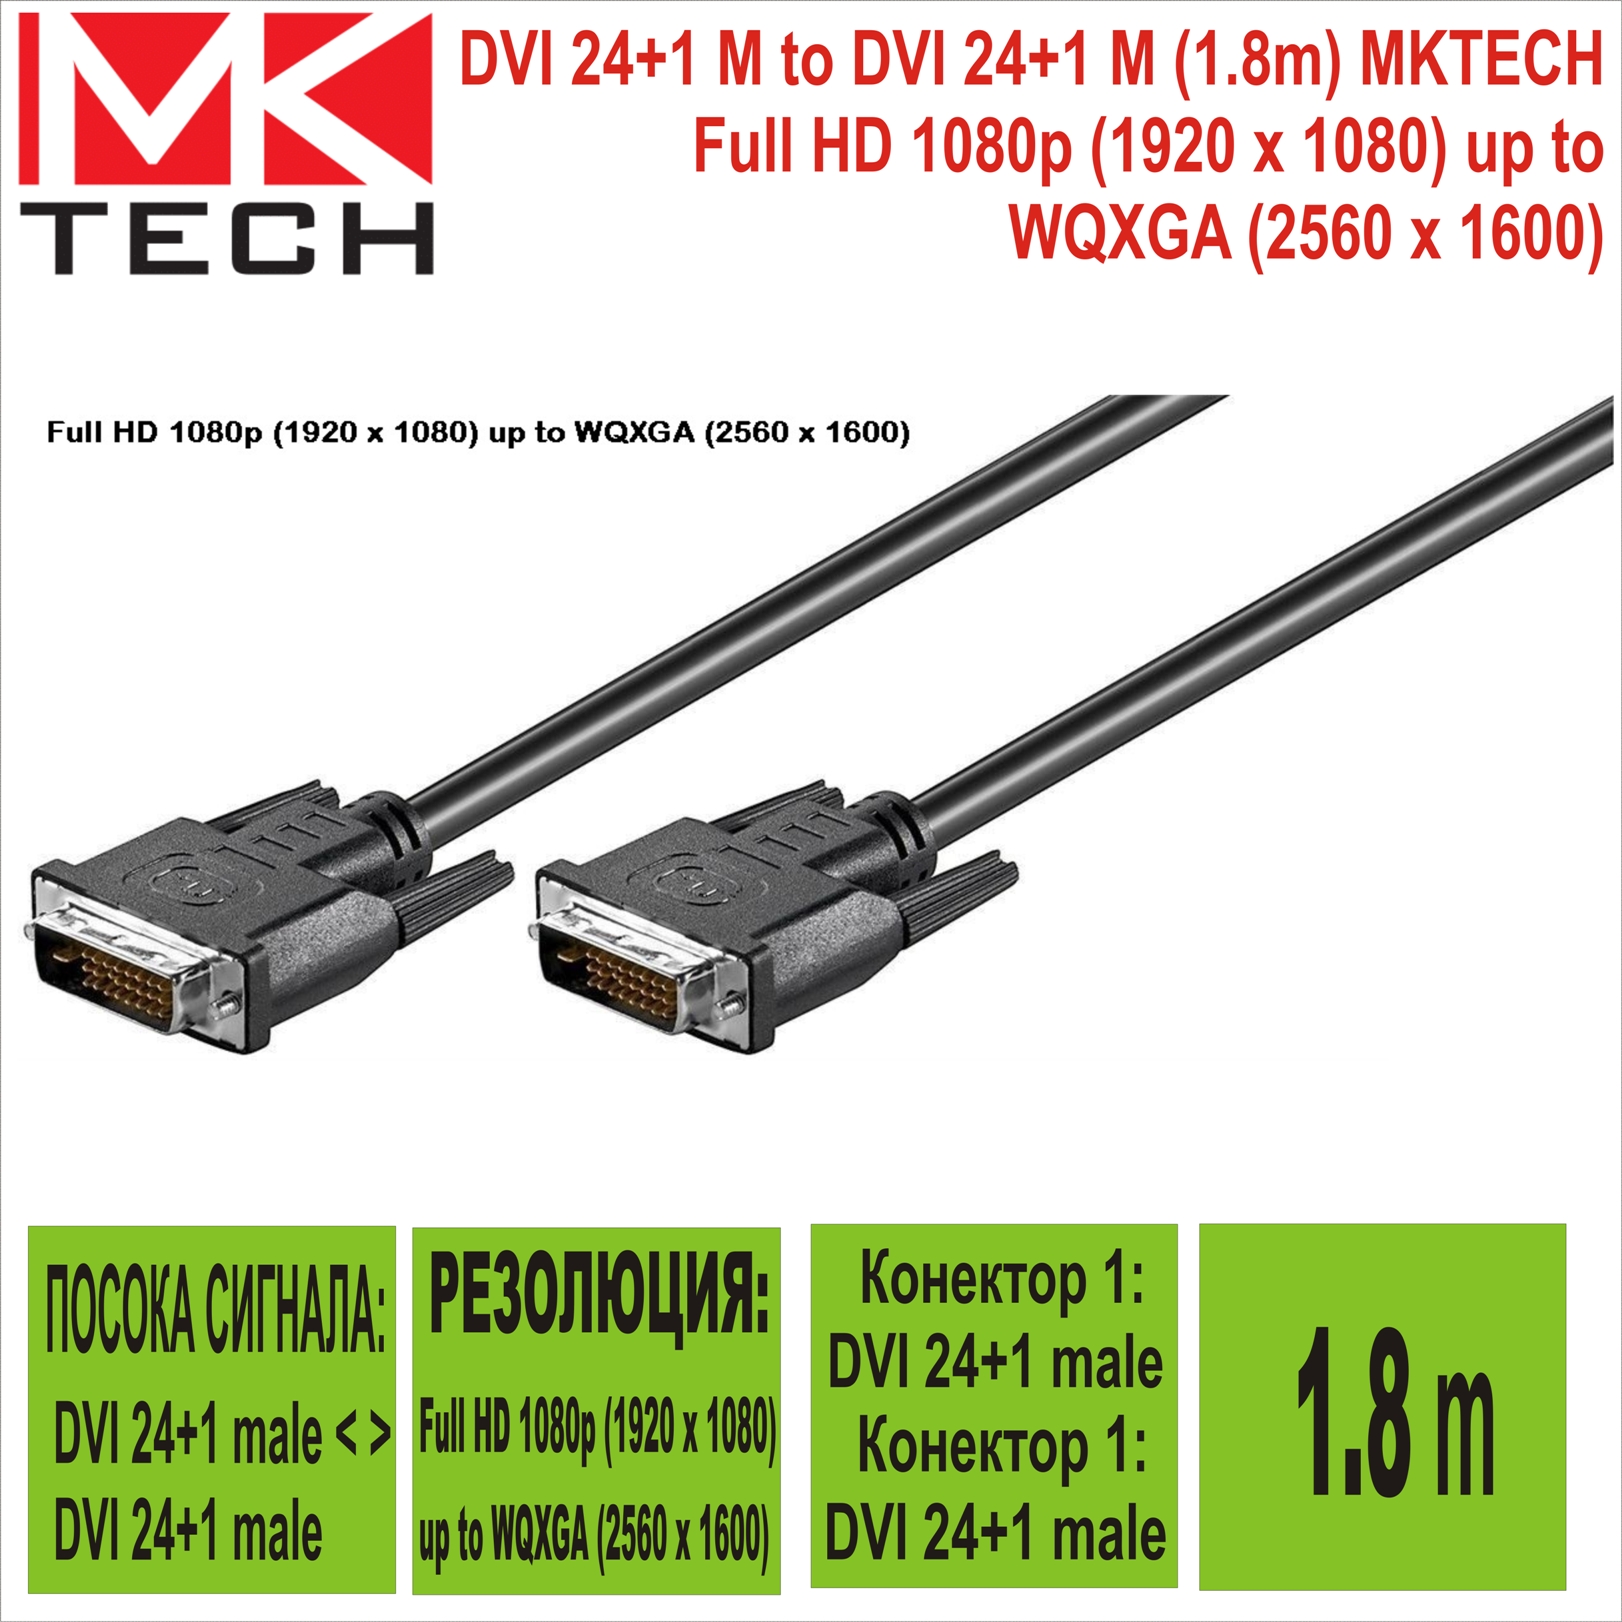 DVI 24+1 M to DVI 24+1 M (1.8m) MKTECH